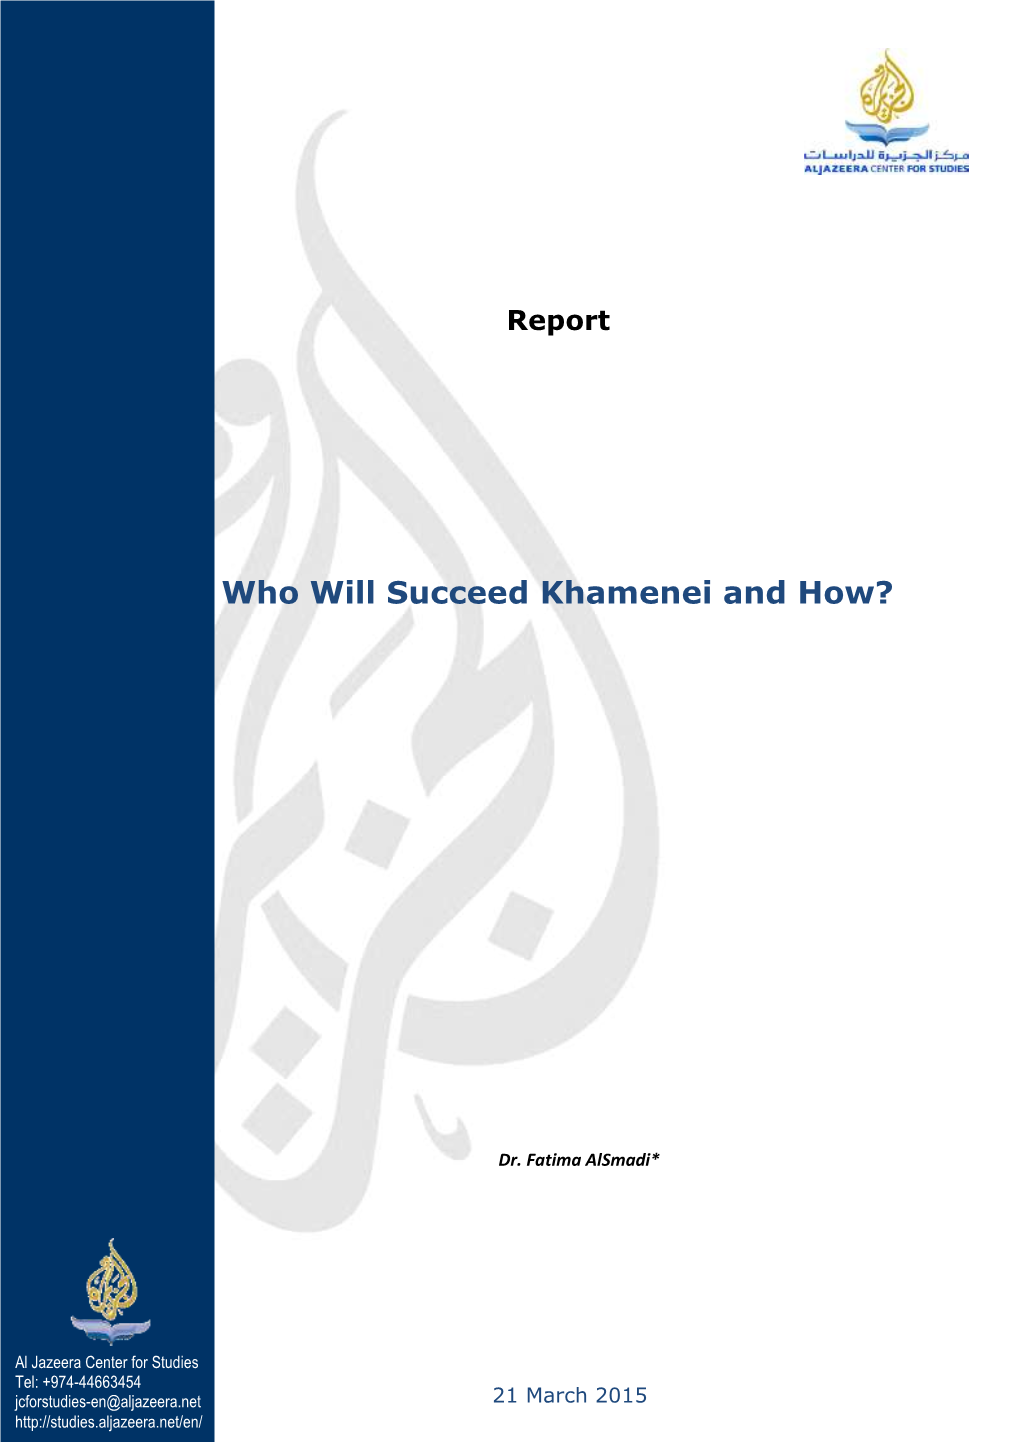 Who Will Succeed Khamenei and How?